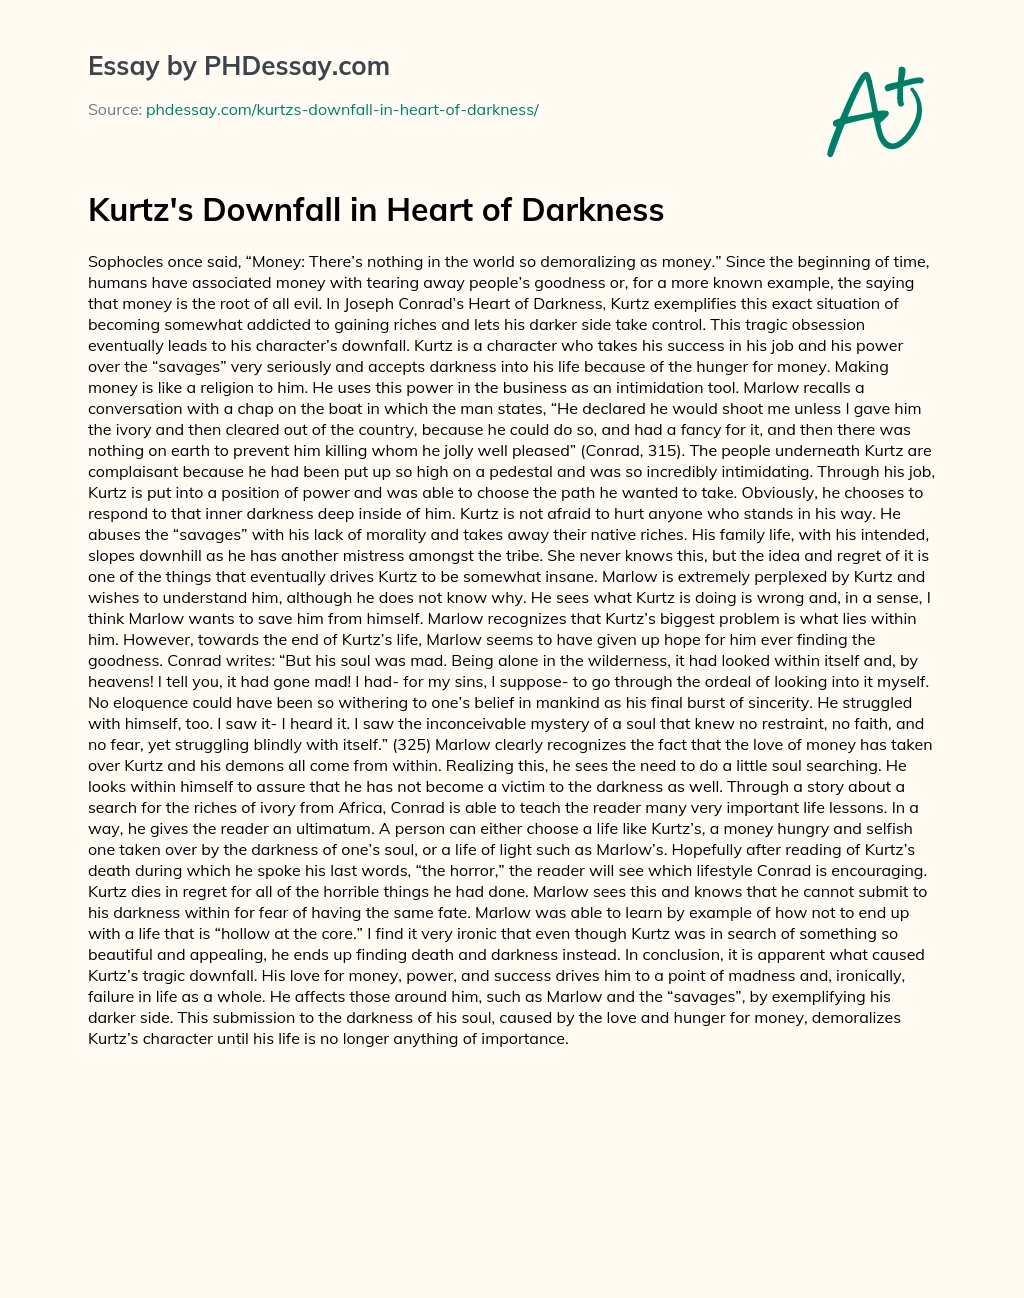 Kurtz’s Downfall in Heart of Darkness essay